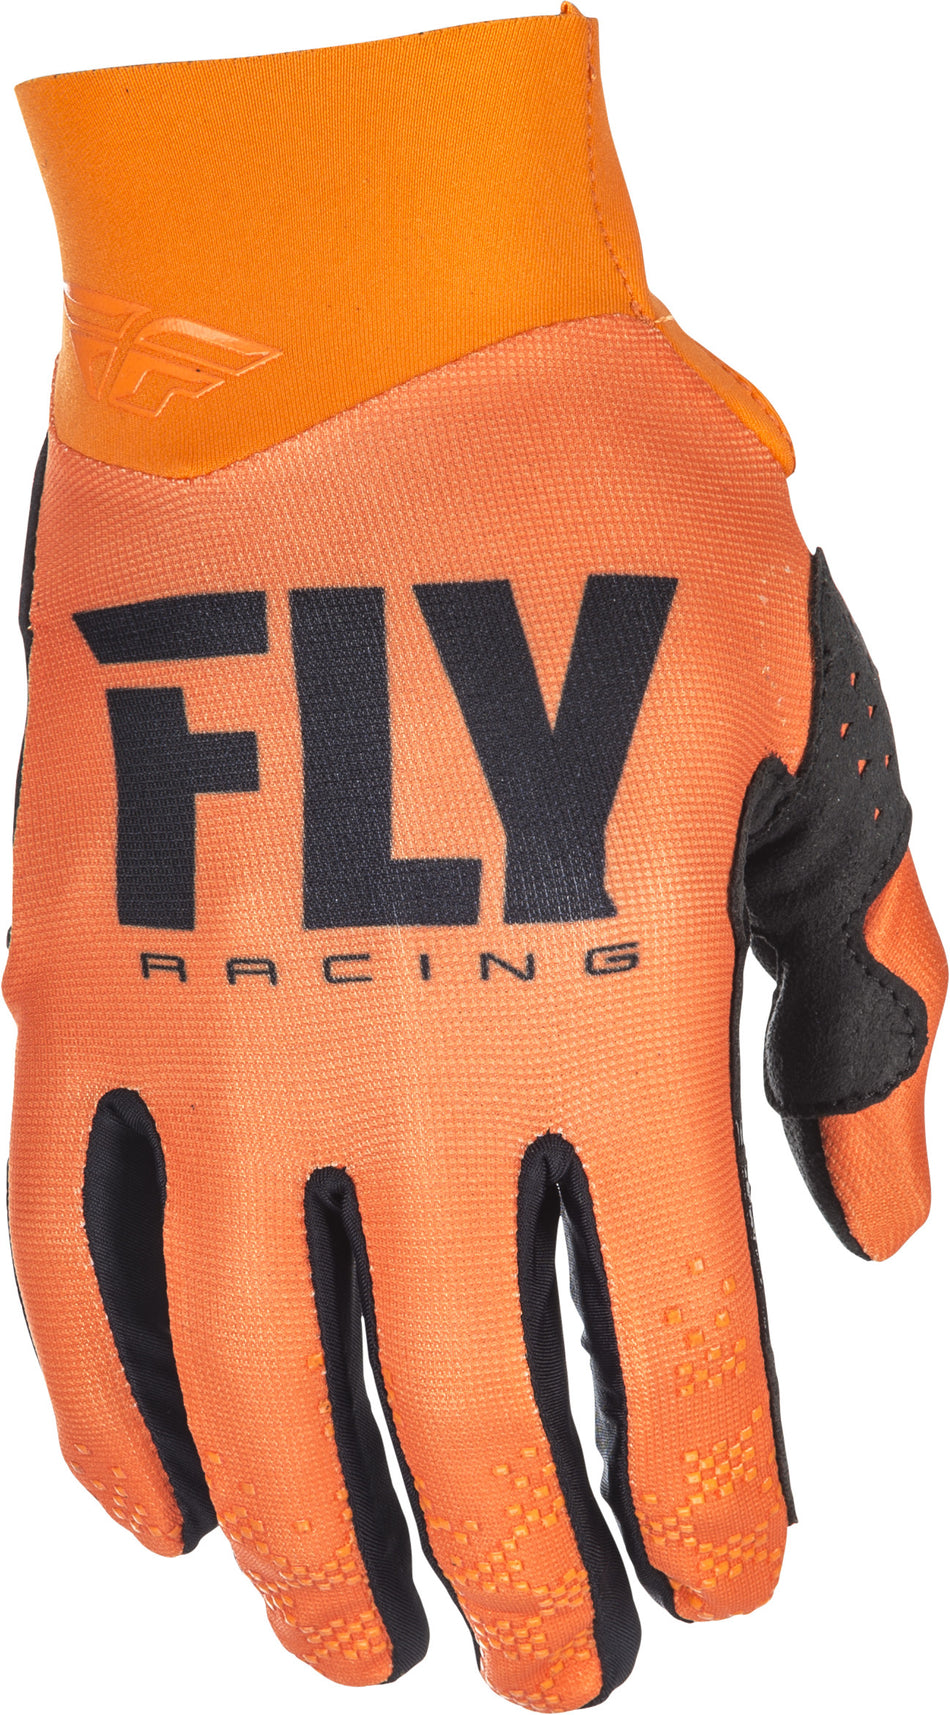 FLY RACING Pro Lite Gloves Orange Sz 8 371-81808